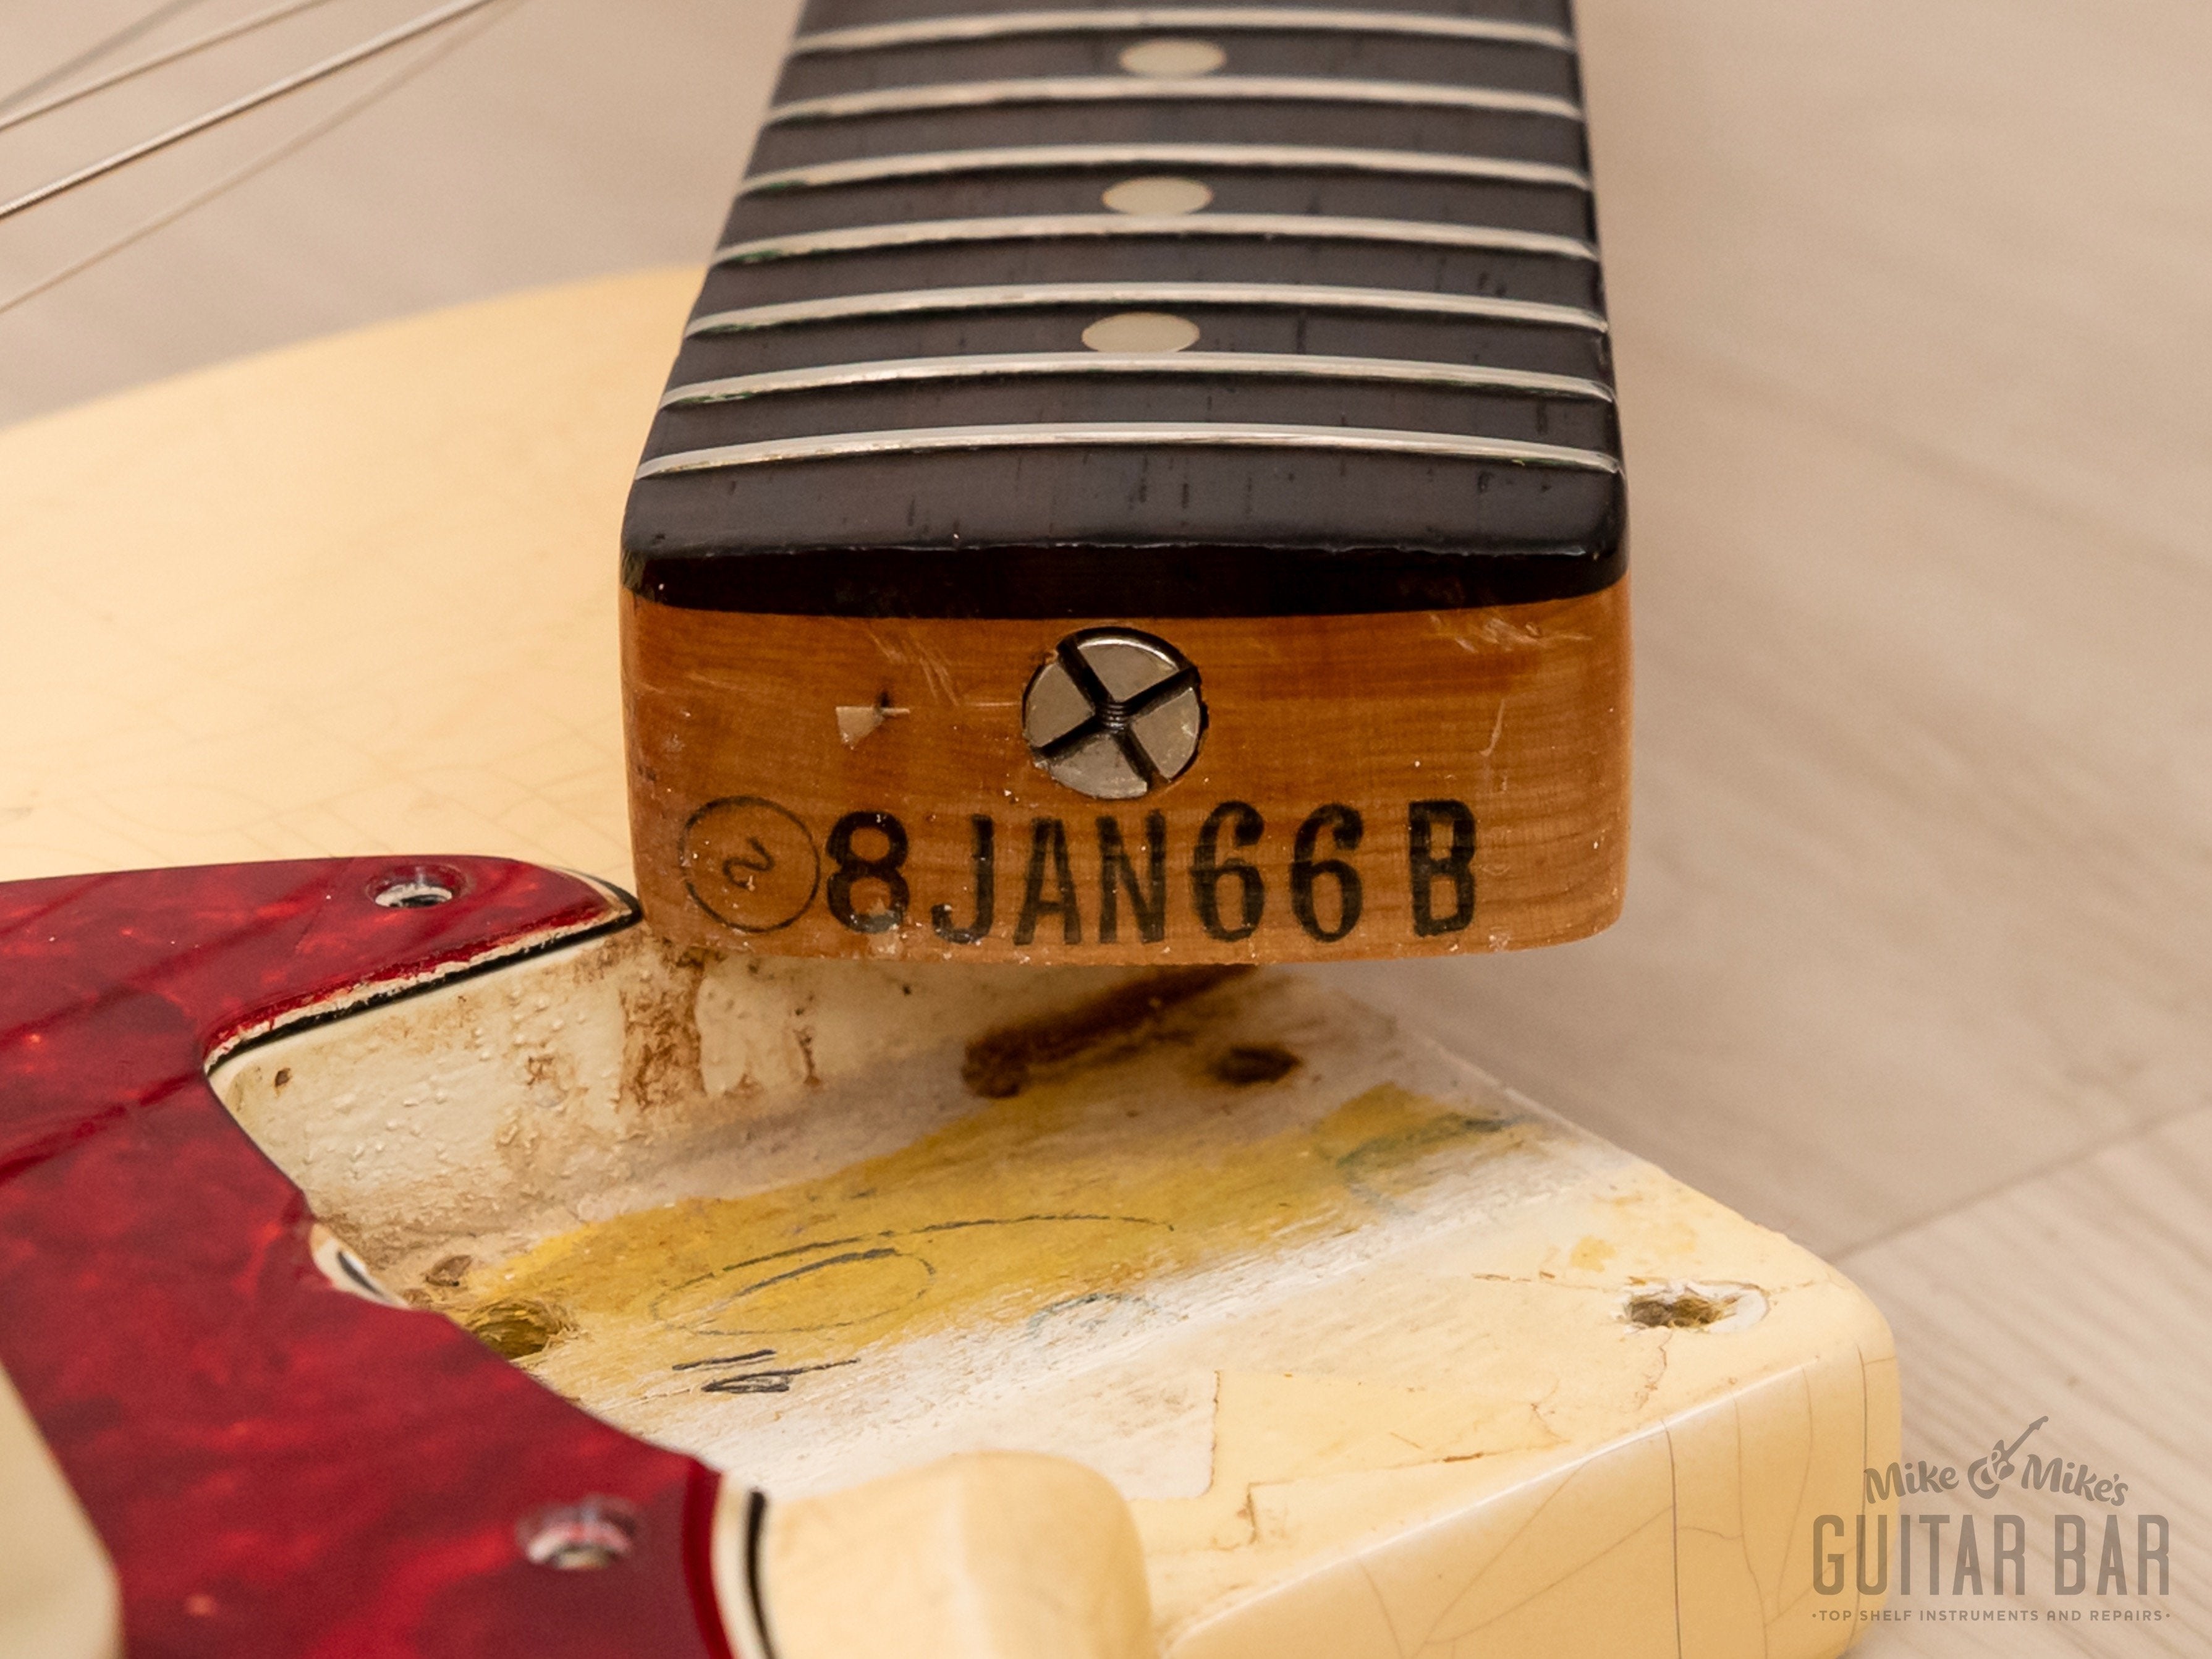 1966 Fender Mustang Vintage Guitar Olympic White 100% Original, Slab Board w/ Case